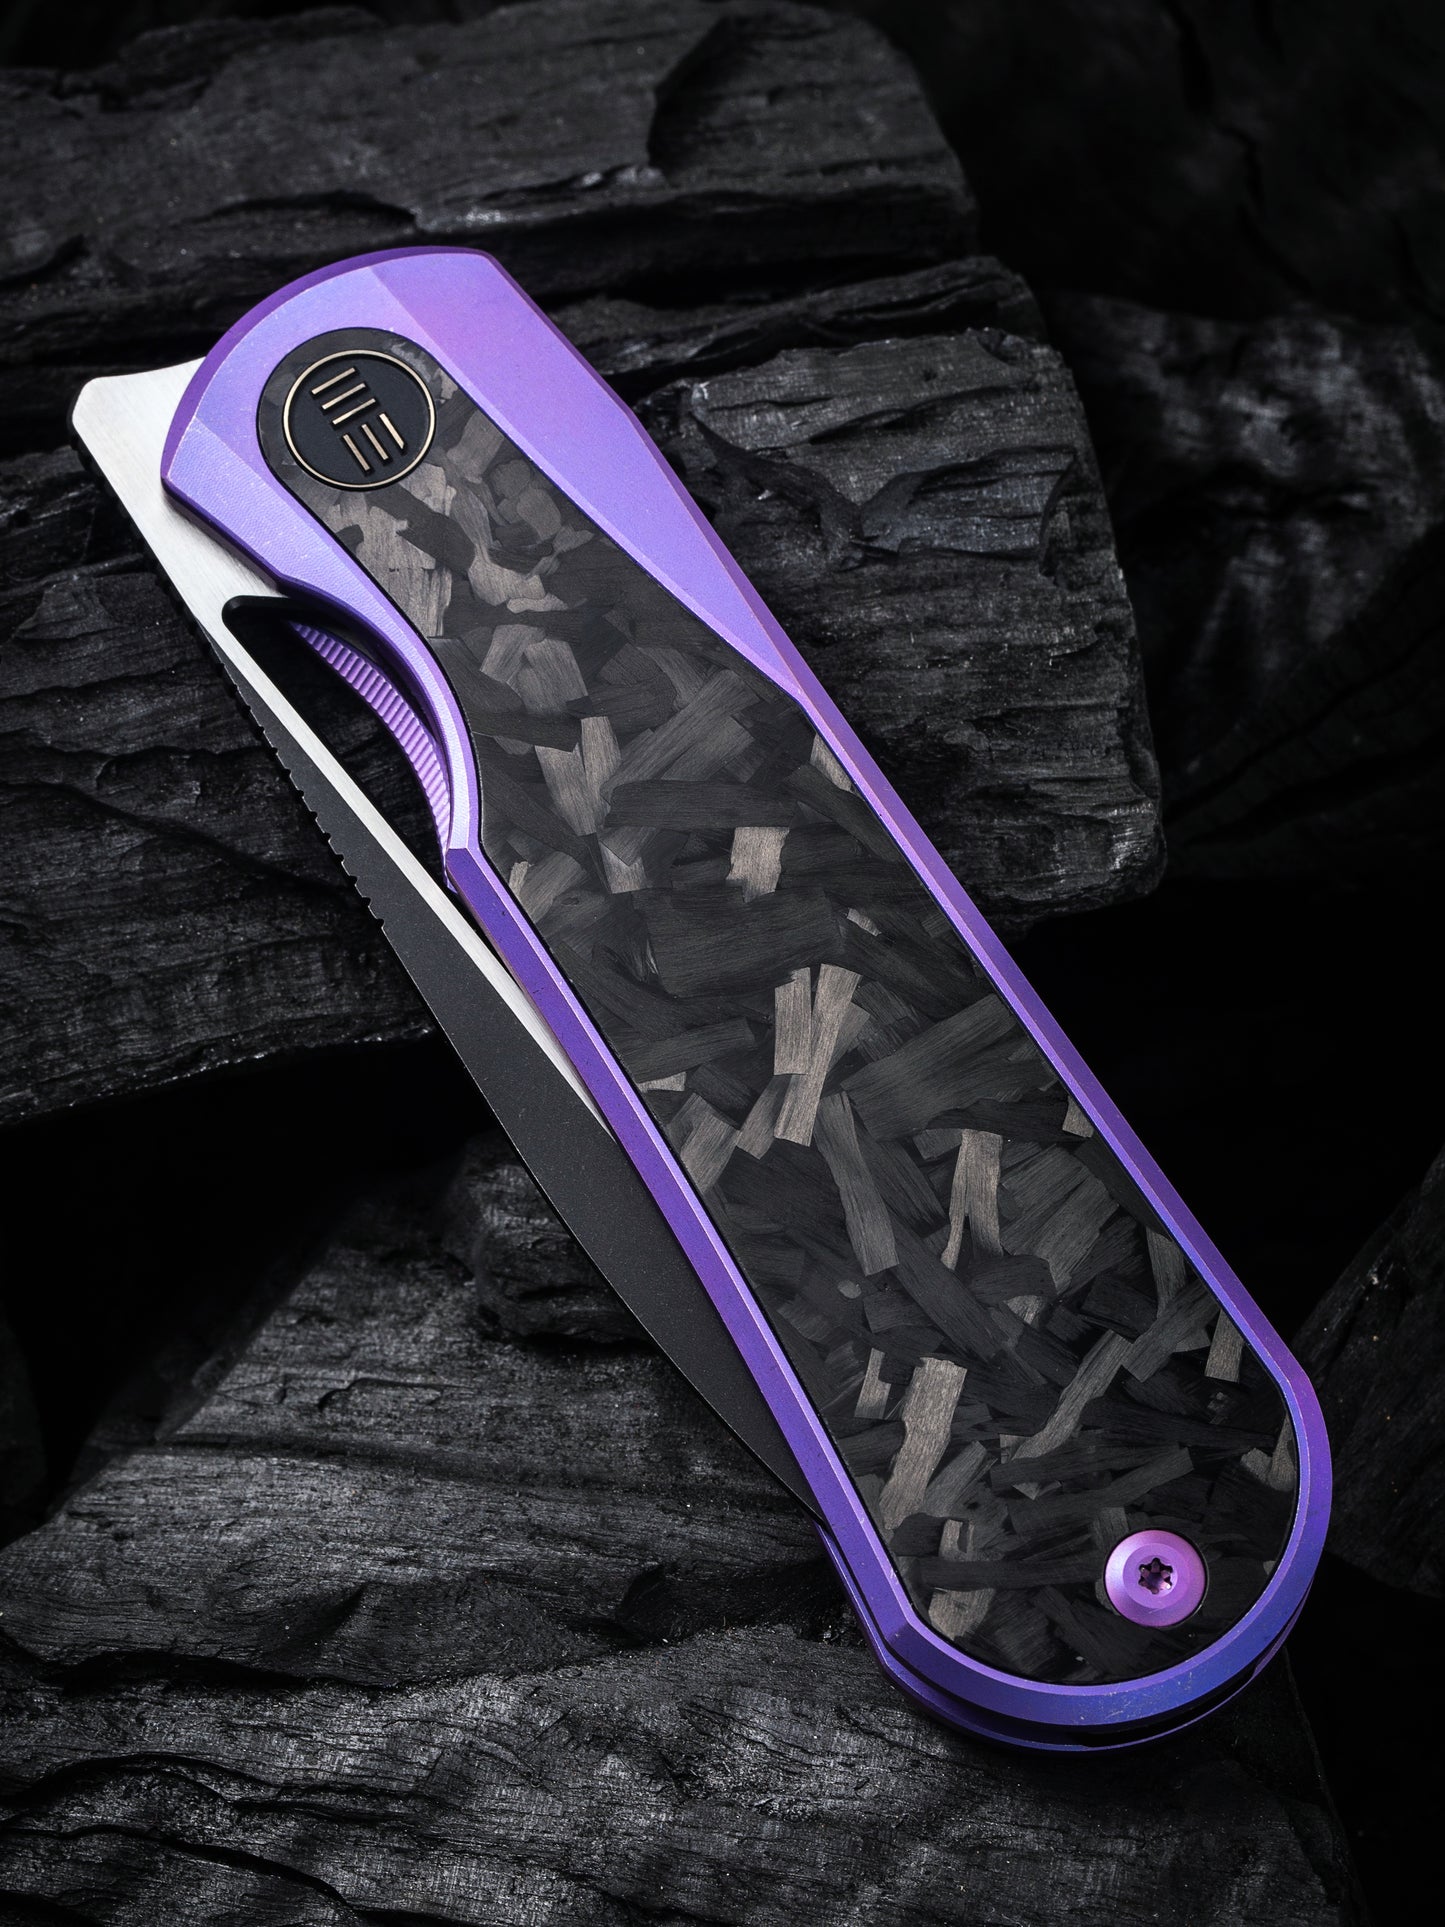 WE Baloo 3.31" CPM 20CV Purple Shredded Carbon Fiber Titanium Folding Knife by Ostap Hel WE21033-3